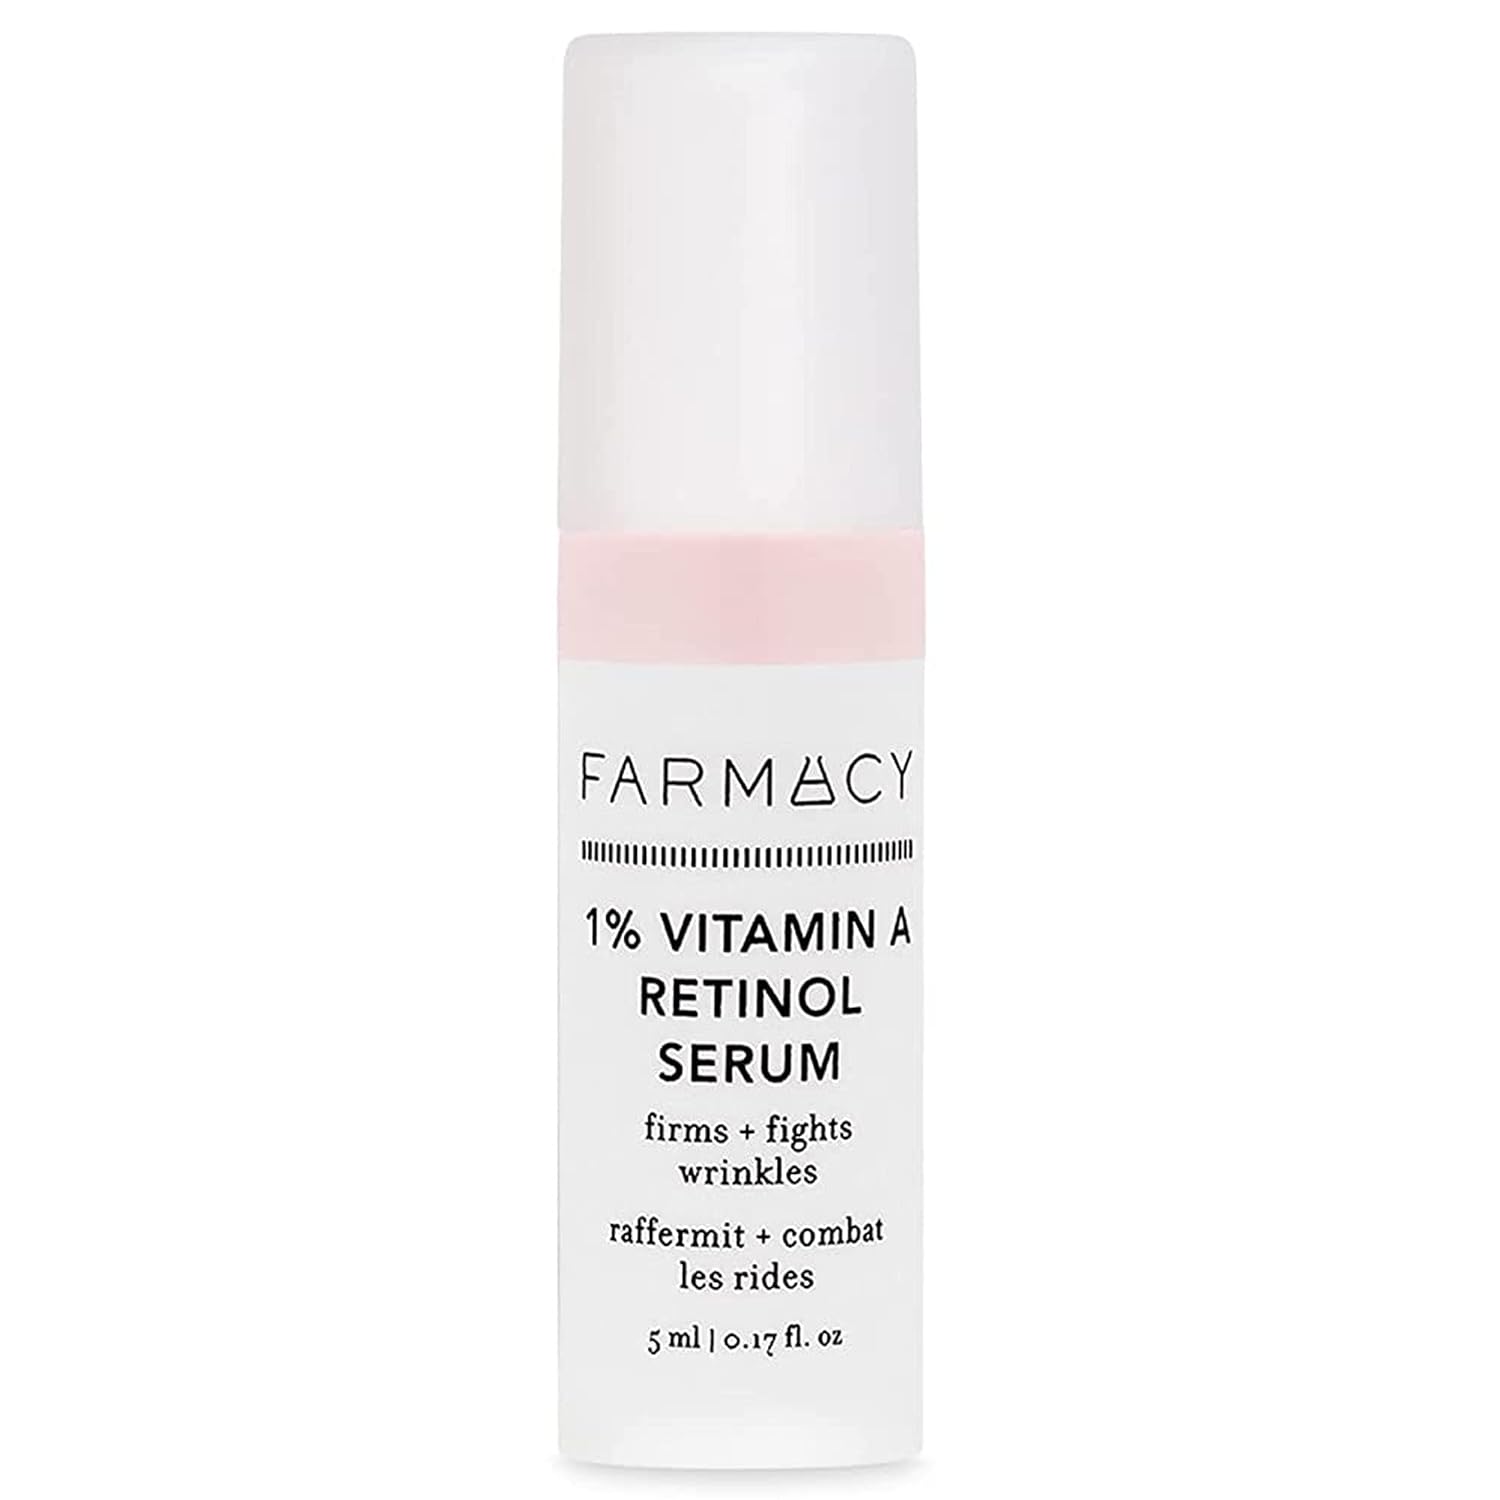 Farmacy Retinol Serum for Face - 1% Vitamin A Anti Wrinkle Serum - Resurfacing Retinol Serum with 2 Retinoid Types - Formulated with Upcycled Ingredients (5ml)